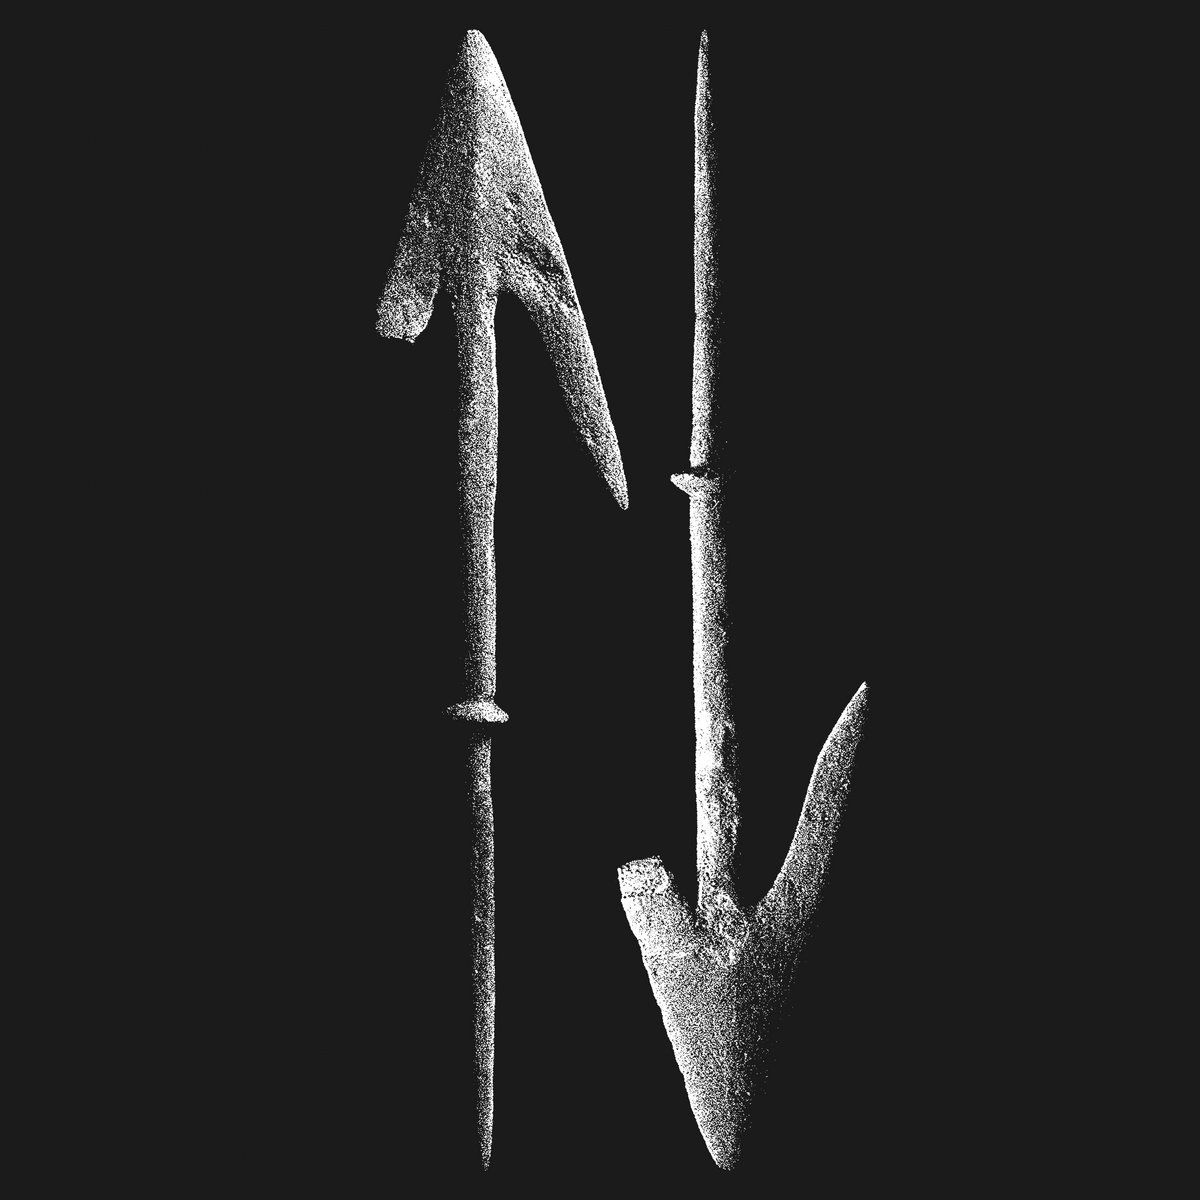 Neue 'Aimless Arrow'-Version namens 'Endless Arrow' veröffentlicht